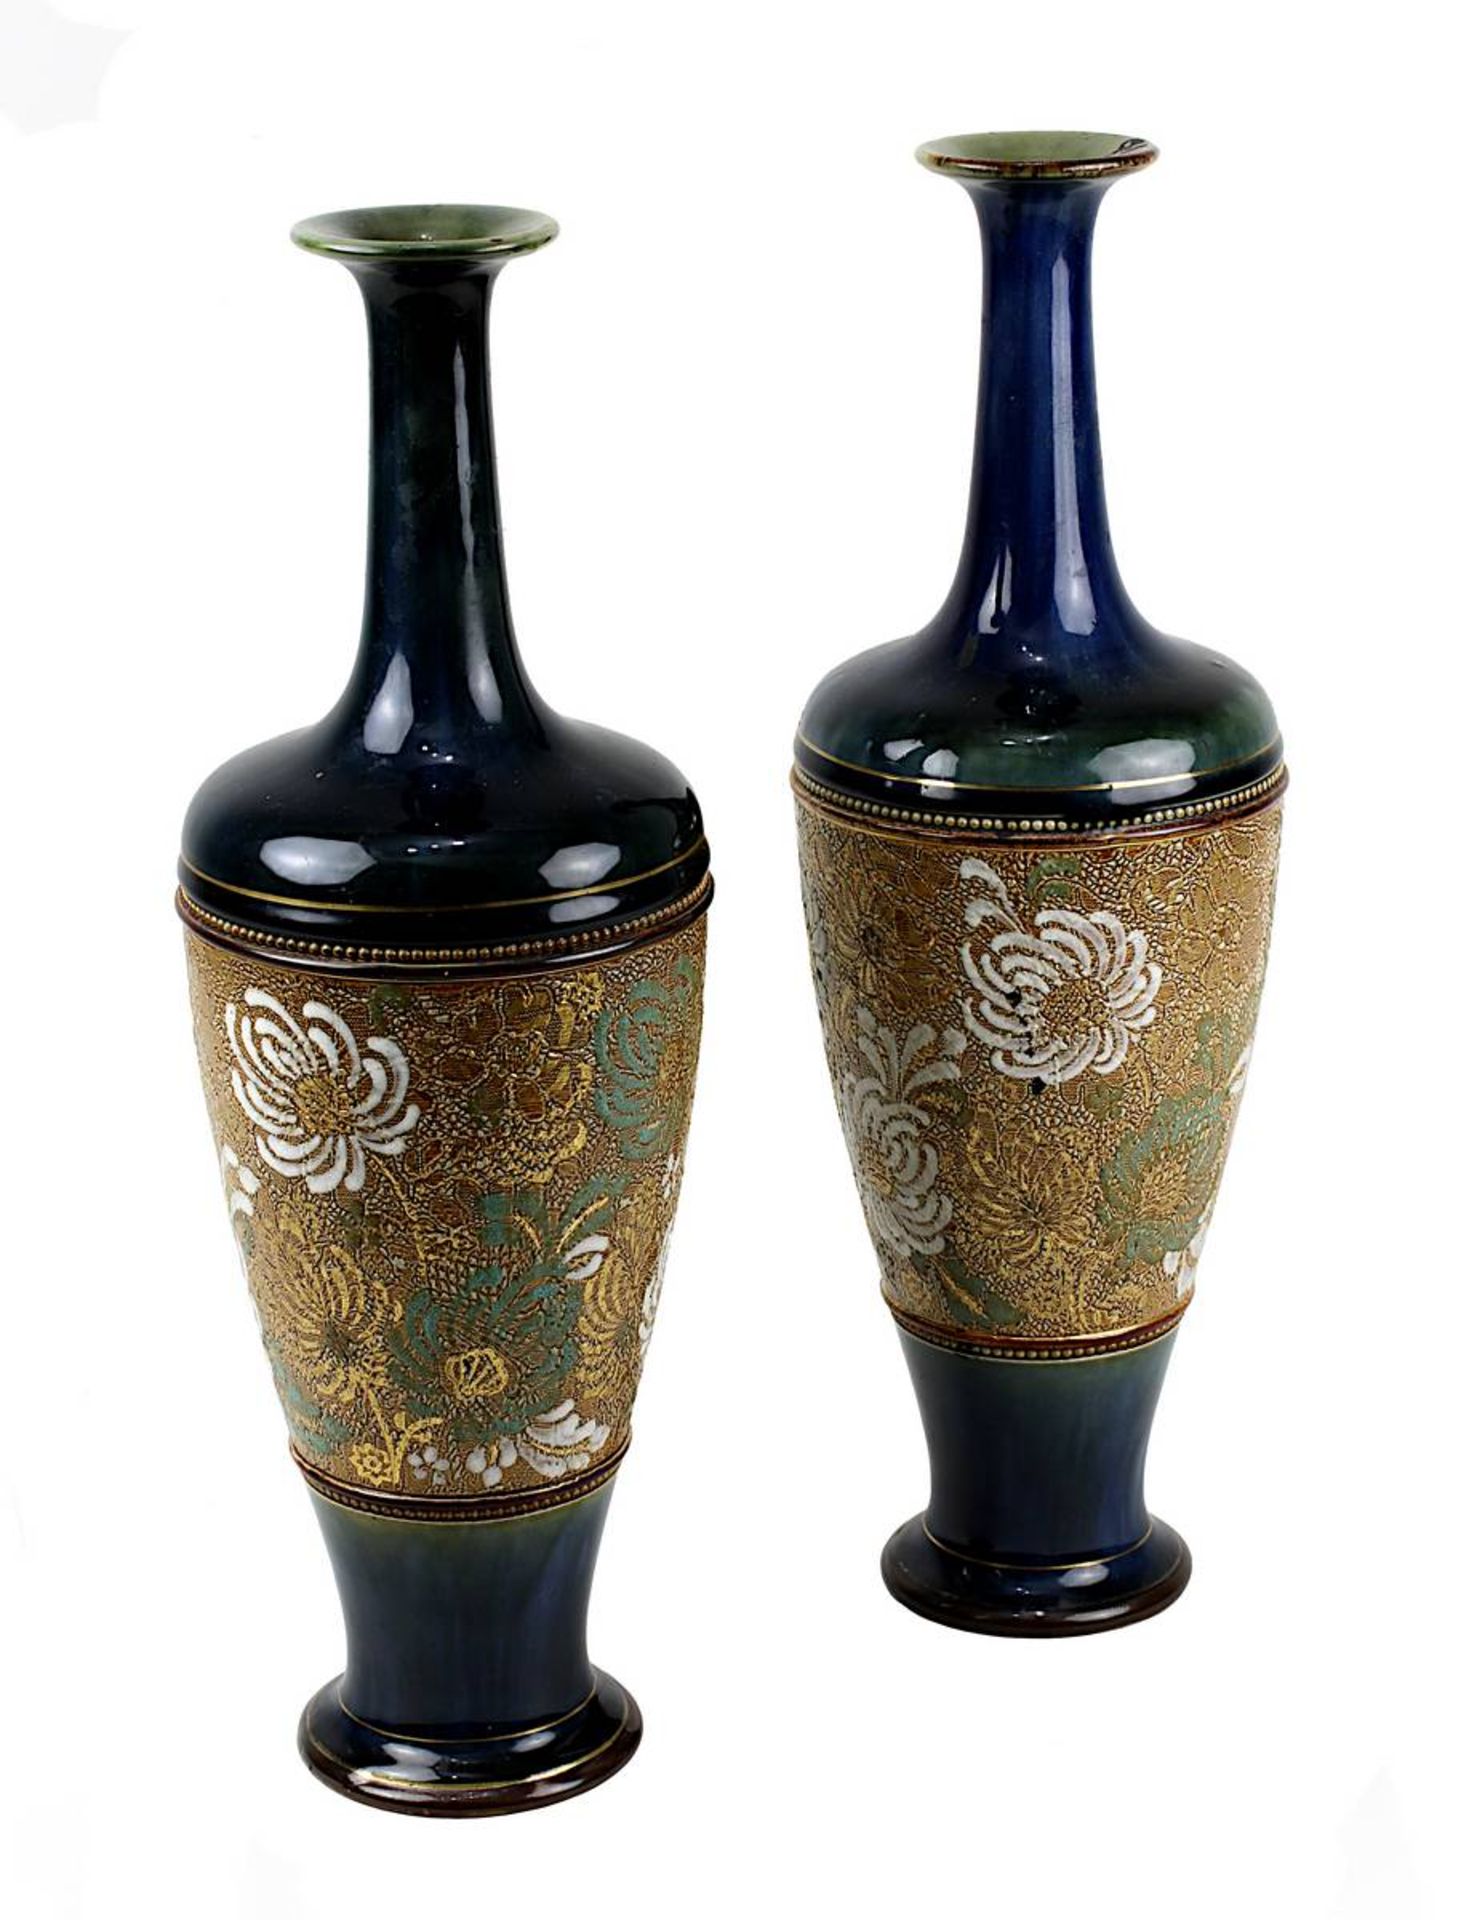 Paar Royal Doulton Vasen, England um 1890, Keramik heller Scherben, Fond mit blaugrüner